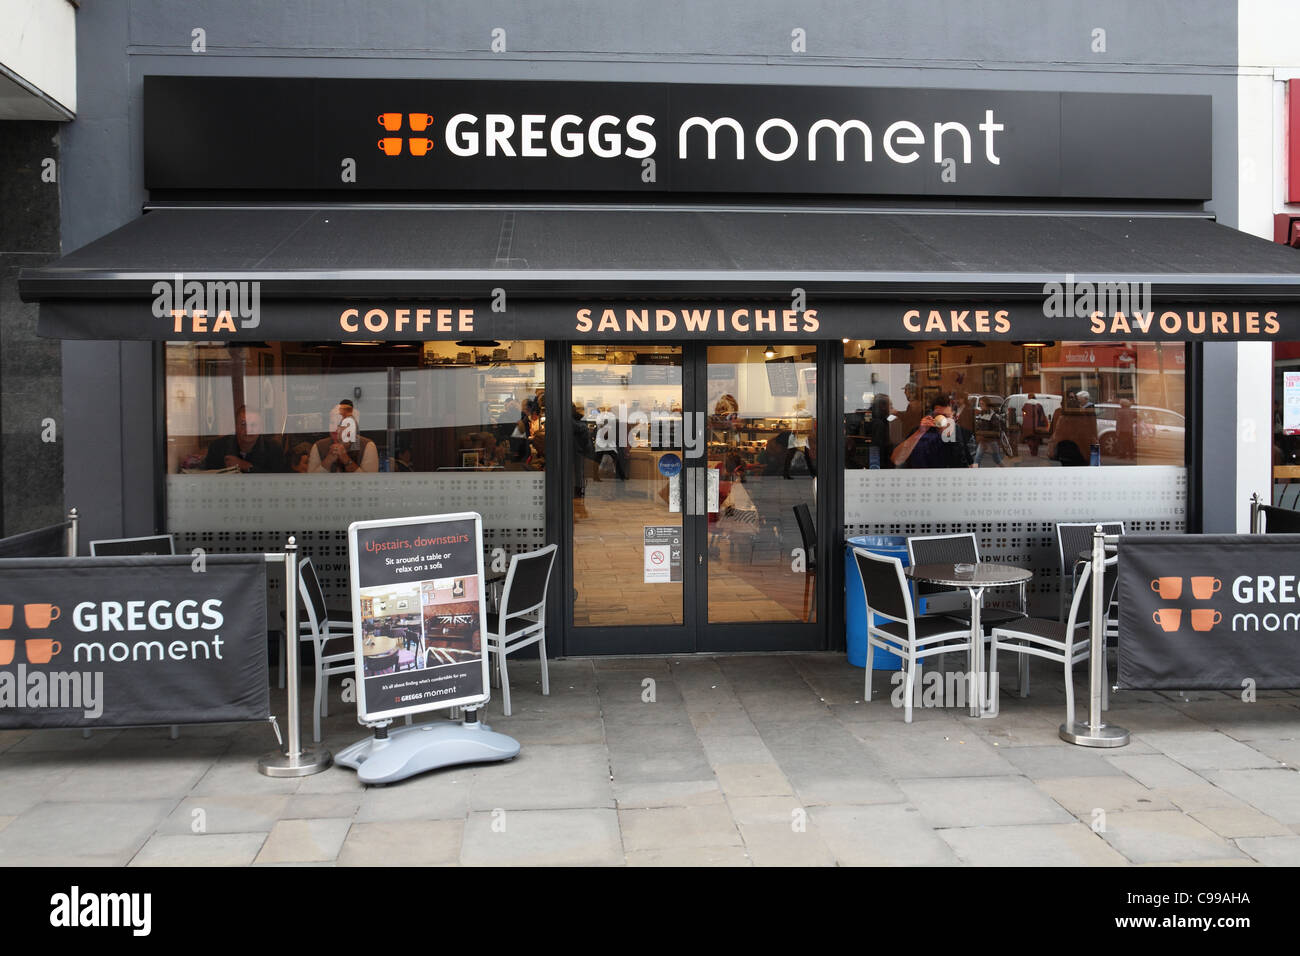 Greggs new up market café Greggs Moment, Northumberland St, Newcastle upon Tyne, north east England, UK Stock Photo